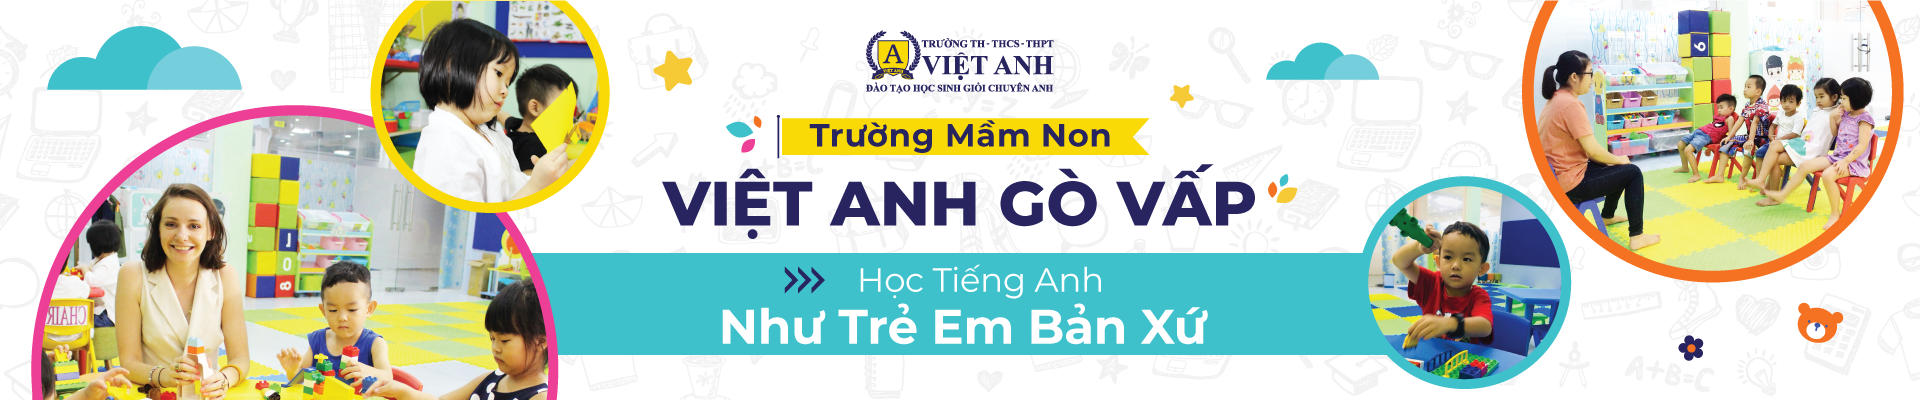 Poster VietAnh TSCK 2018.pdf